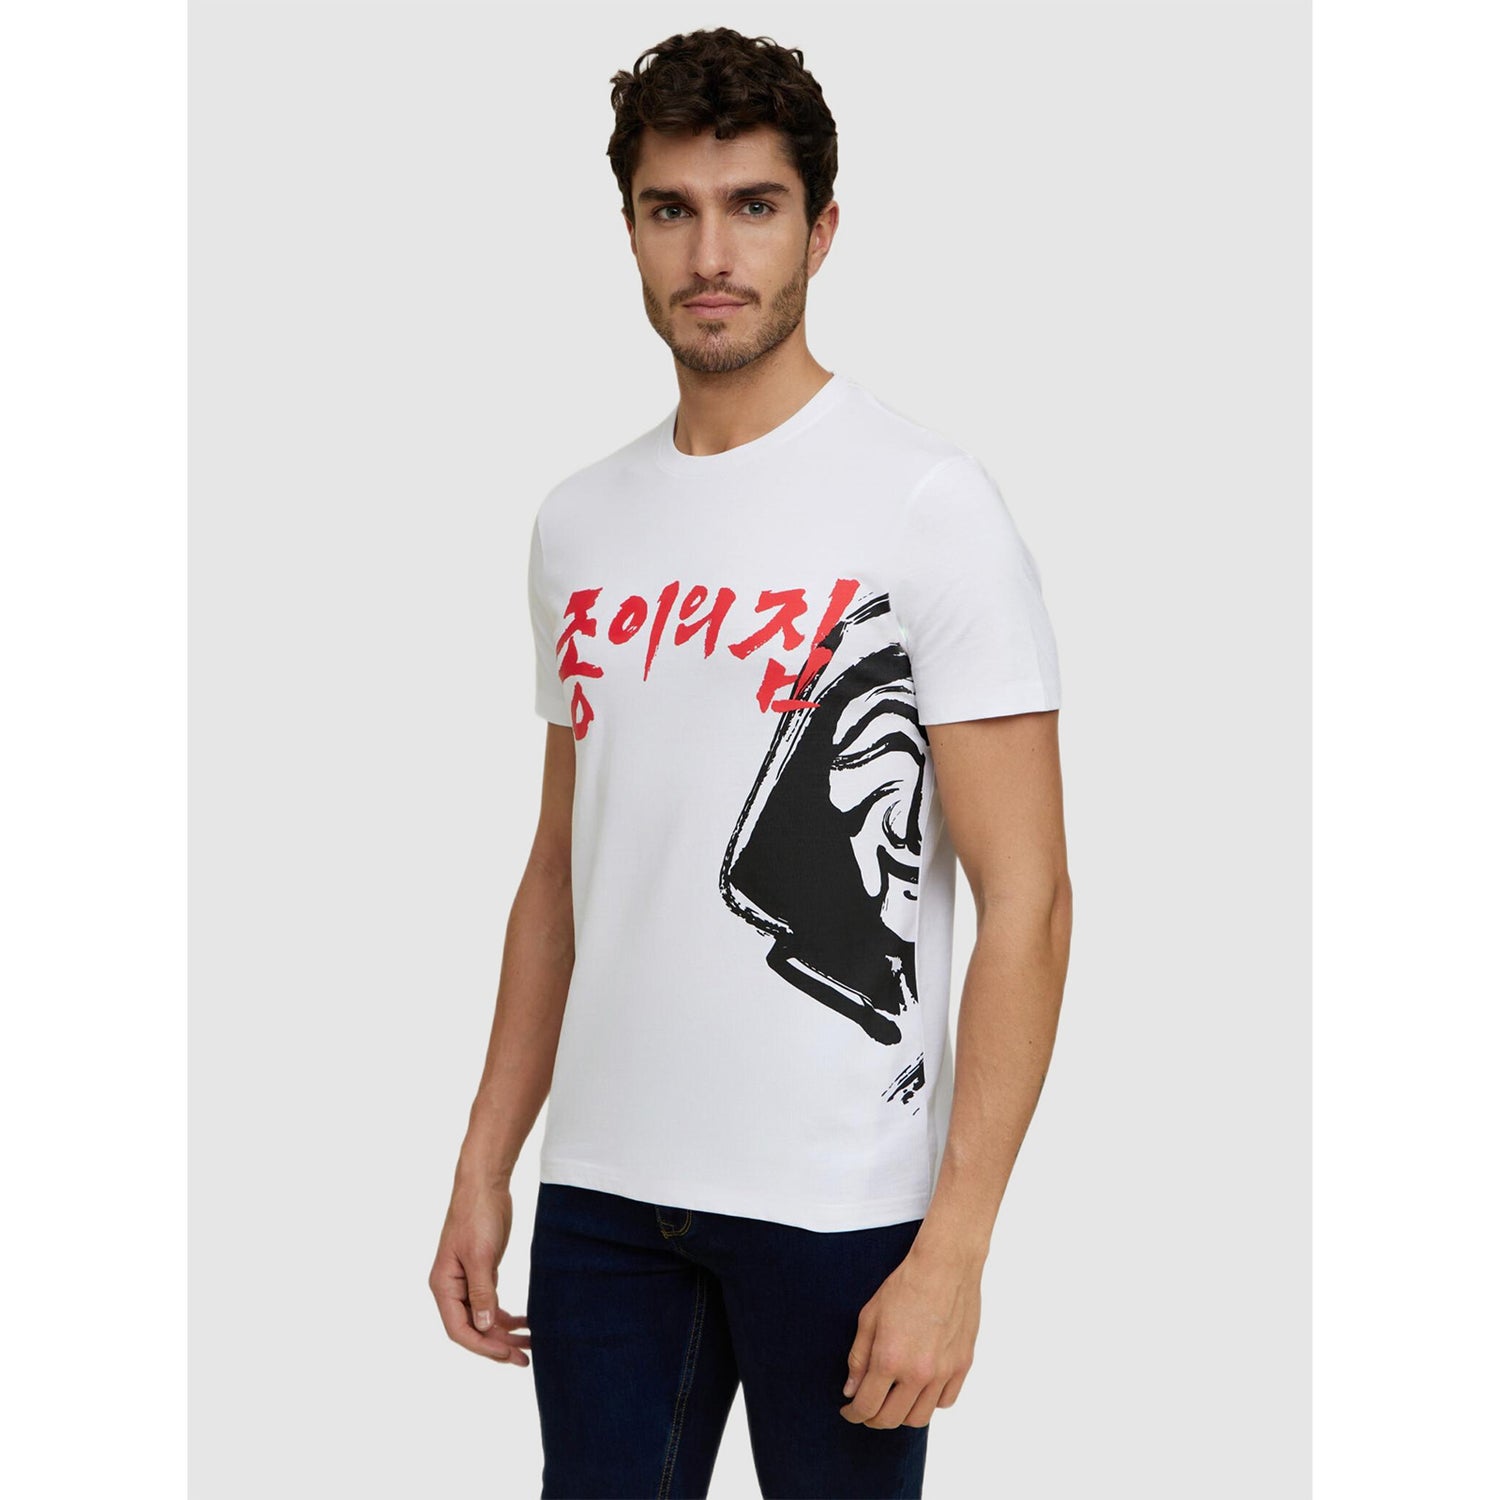 Men's Money Heist White Graphic T-Shirts (Various Sizes)